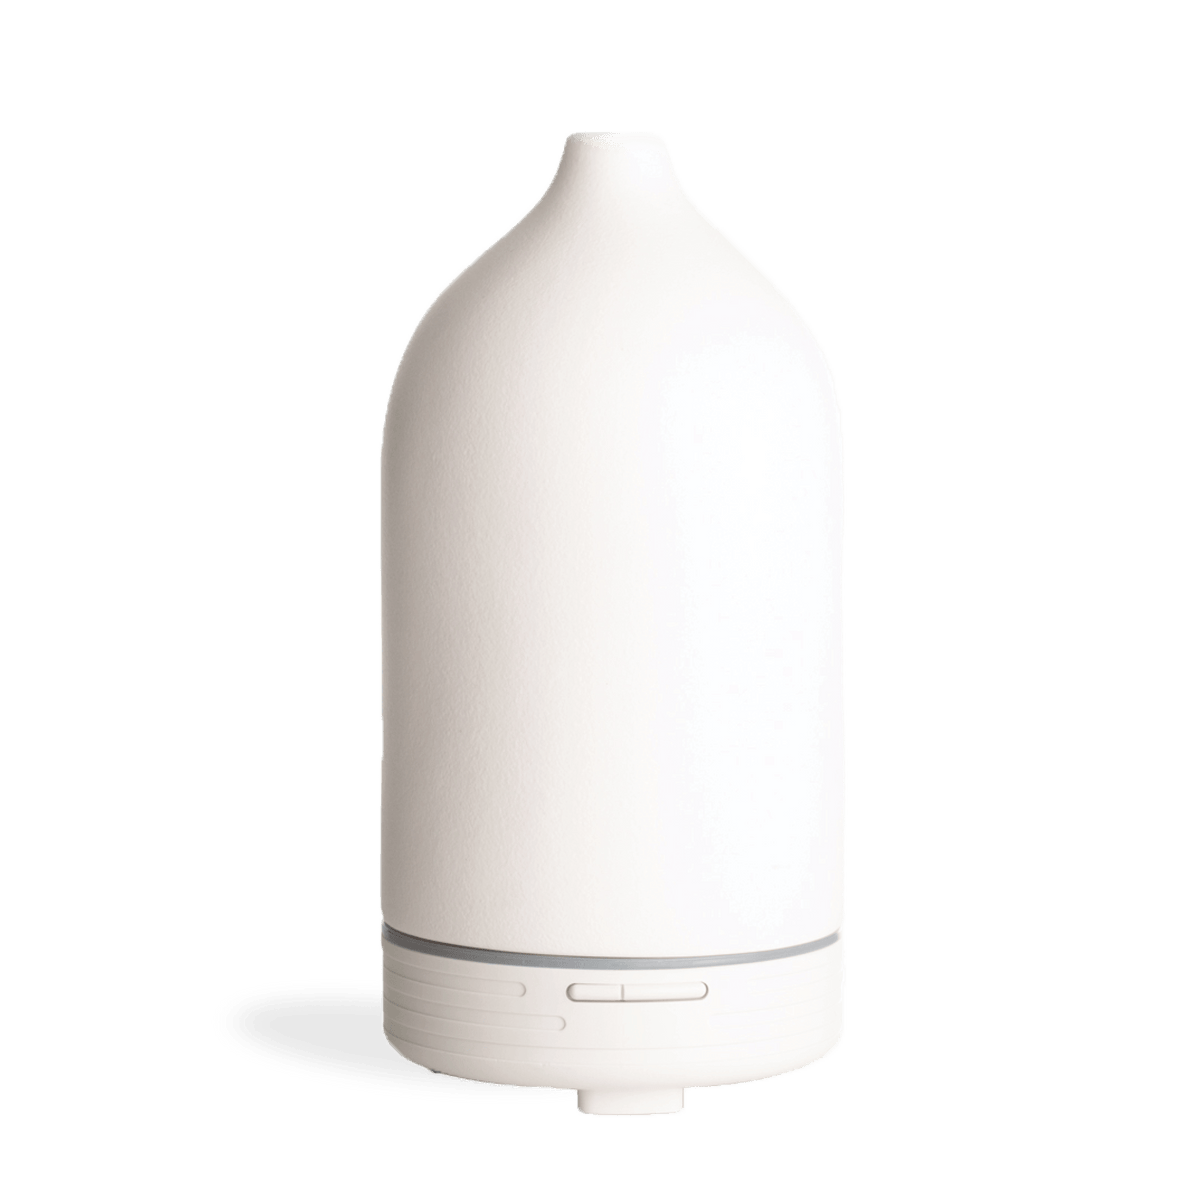 Ceramic Ultrasonic Diffuser - Smooth White